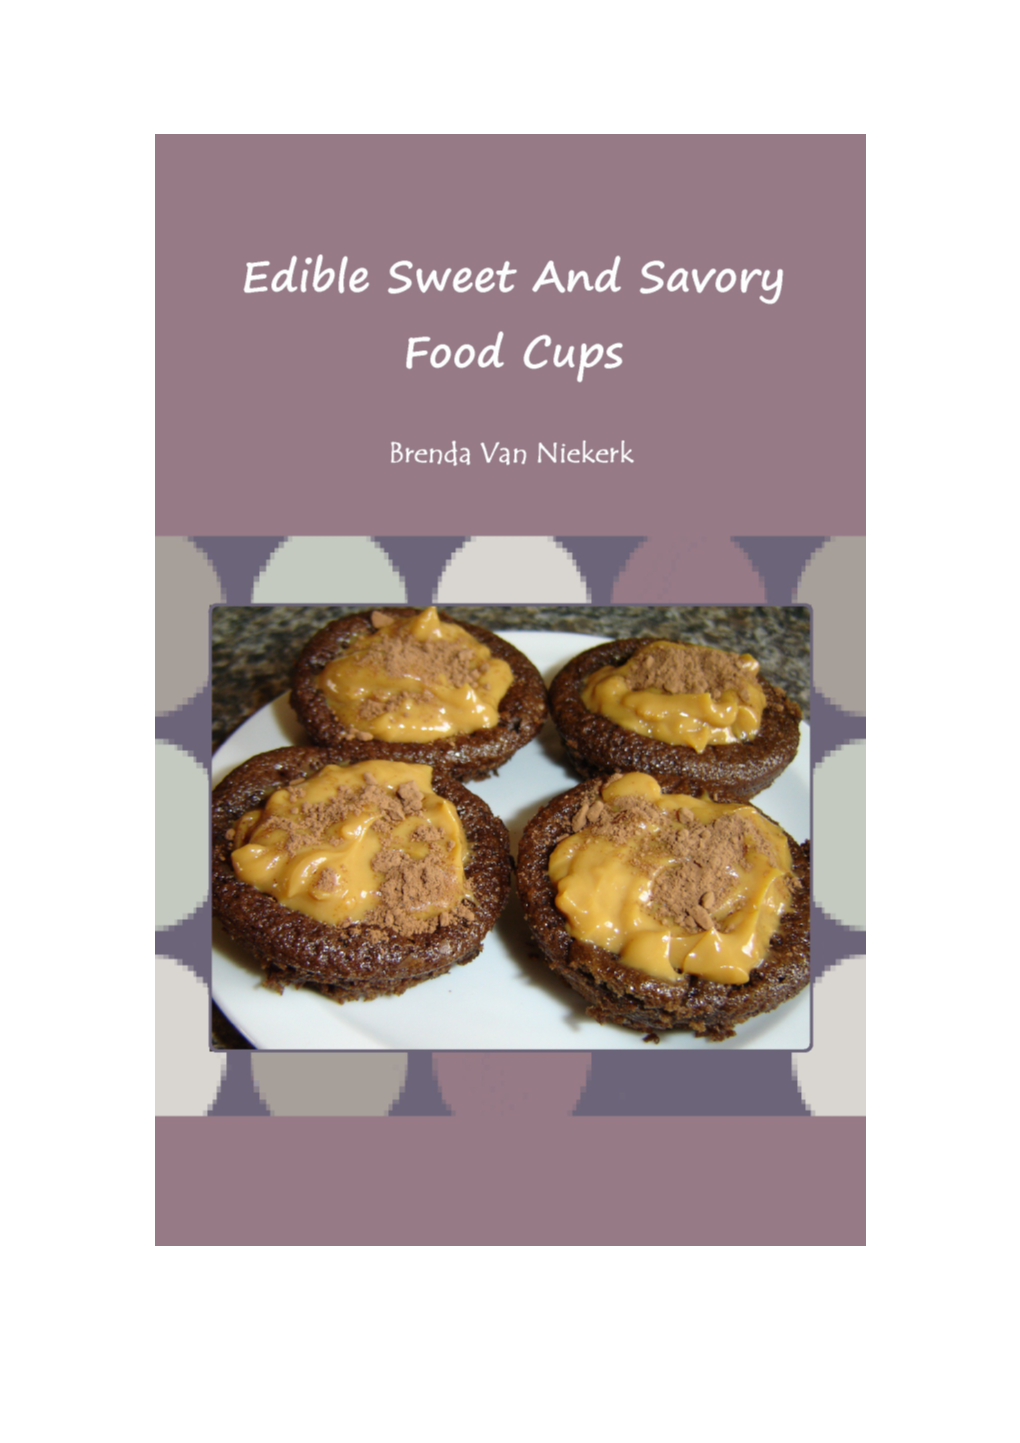 Edible Sweet and Savory Food Cups